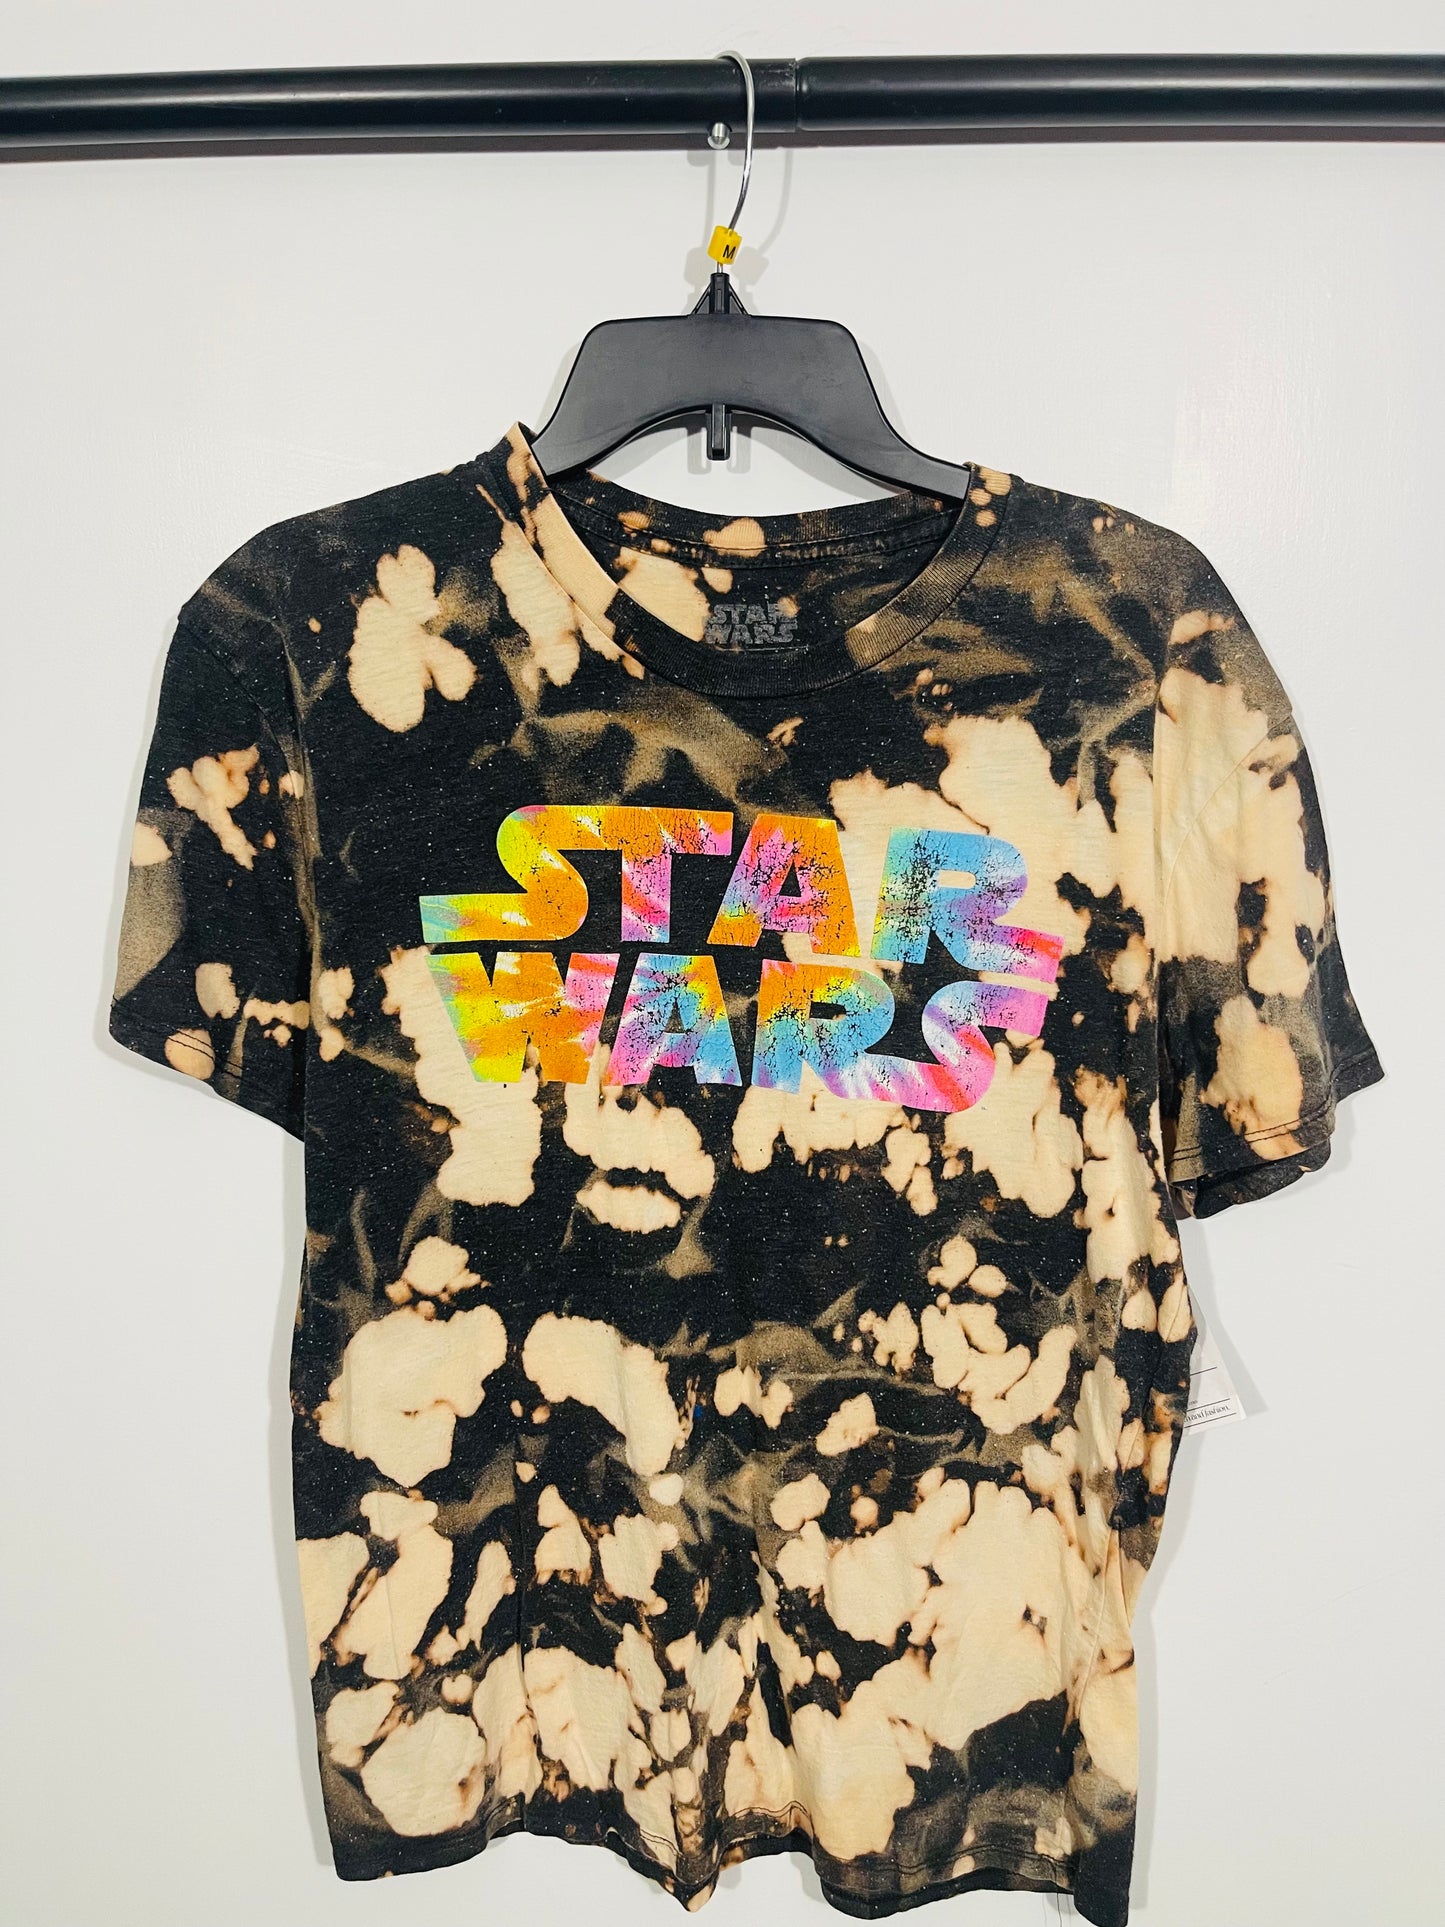 Unisex Medium Star Wars Tee - Kicks and Kindness - Shirts & Tops -